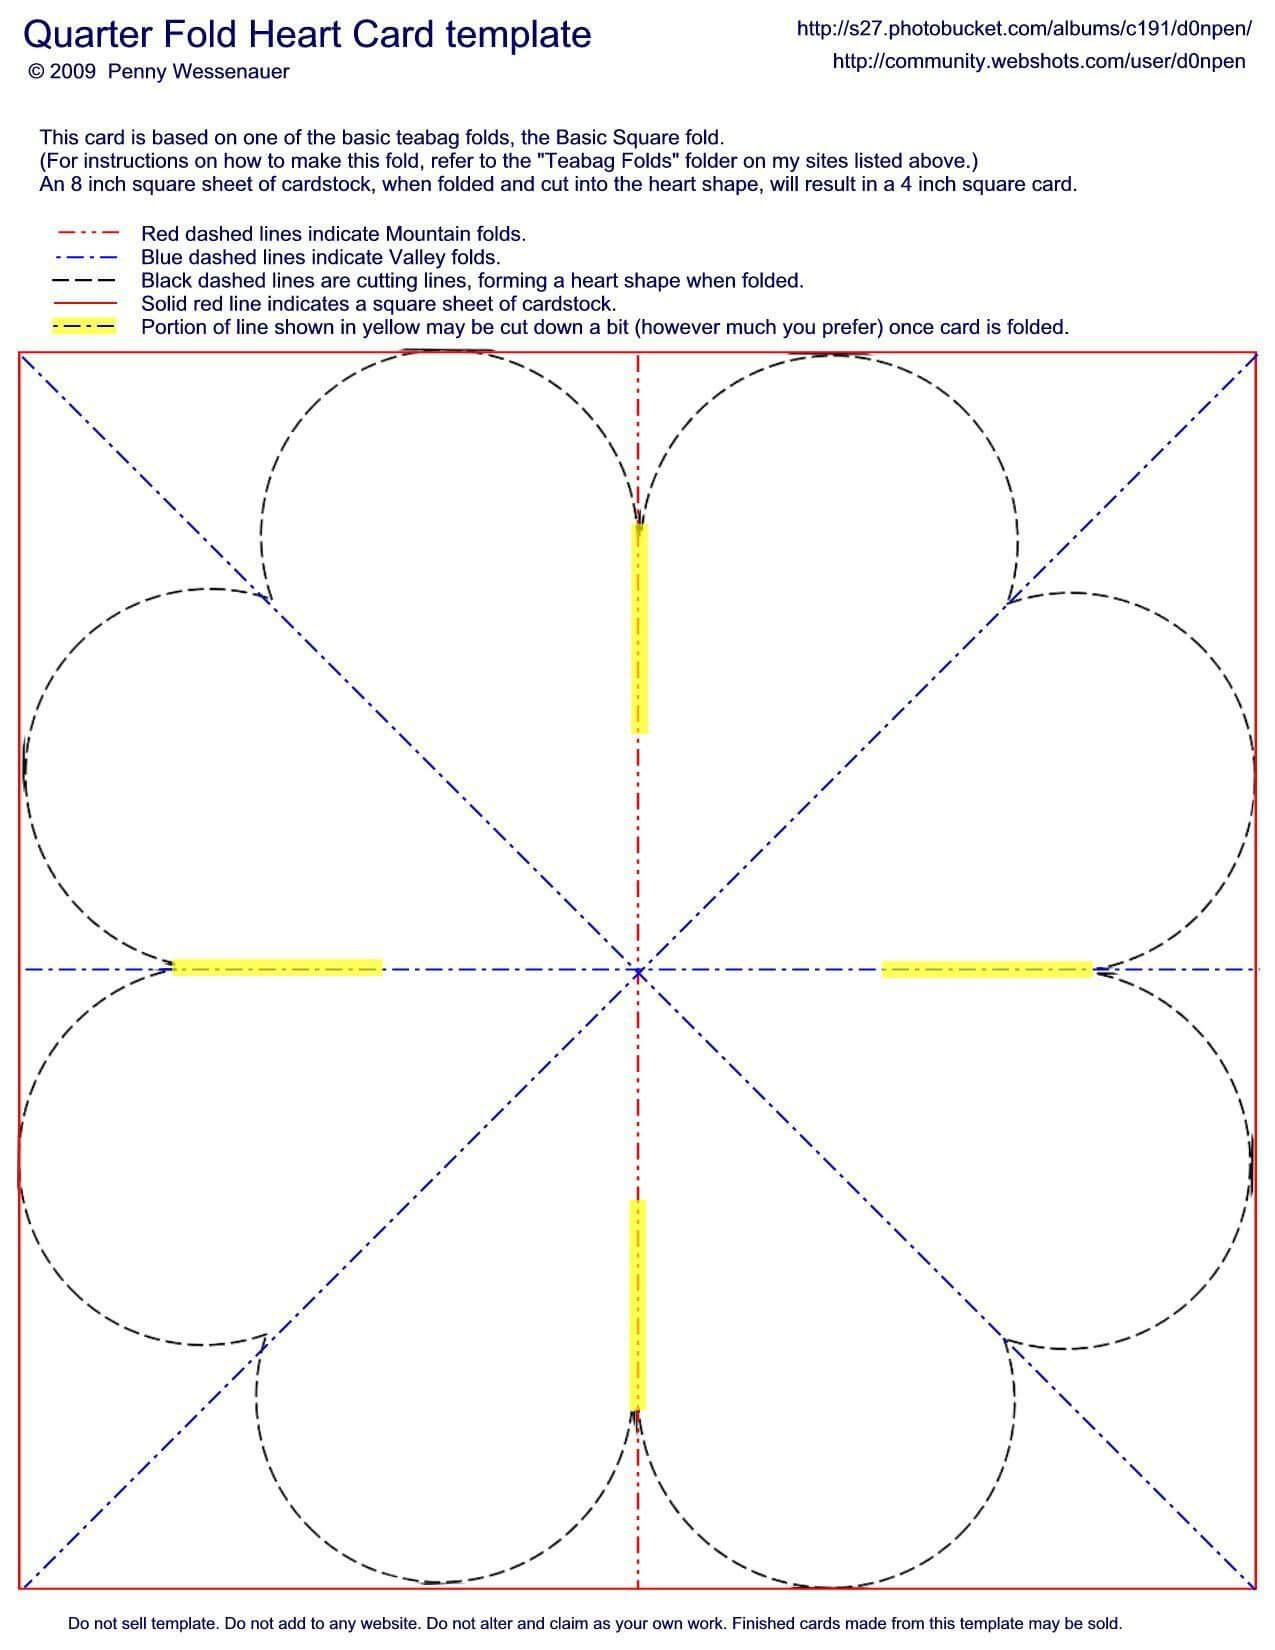 Quarter Fold Heart Card Template | Fancy Folds | Heart Cards With Regard To Quarter Fold Birthday Card Template